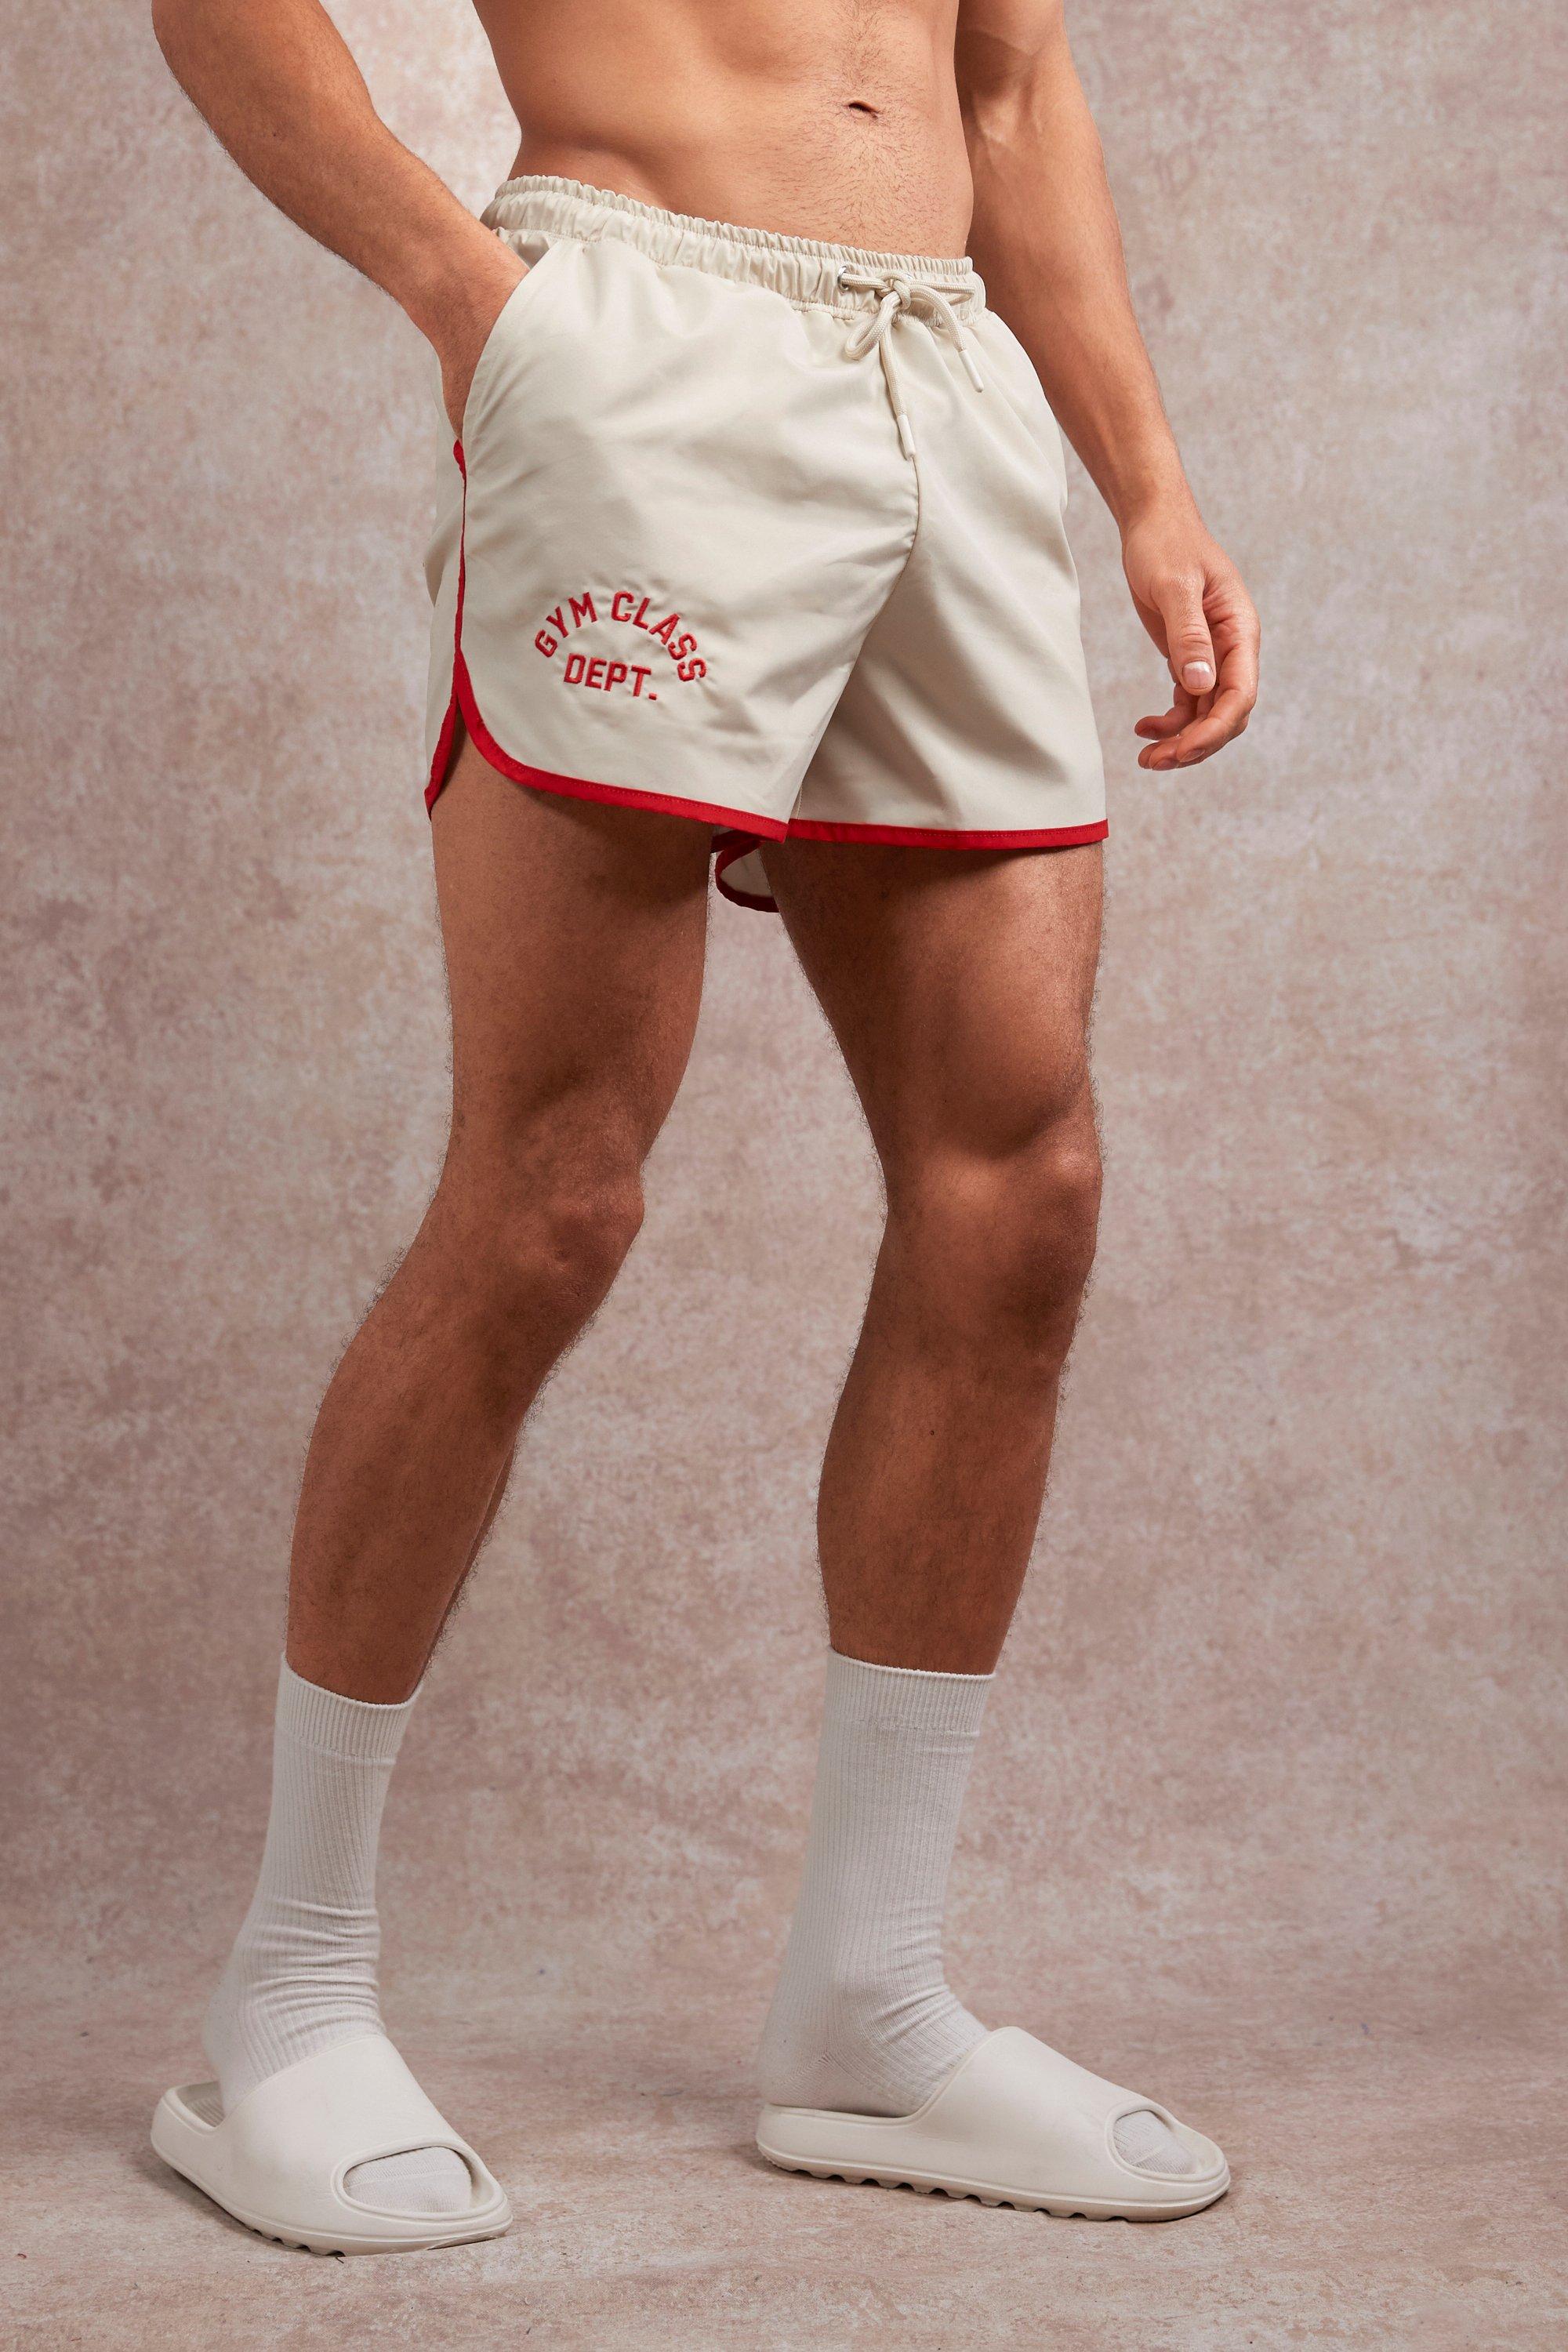 Men’s Retro Workout Clothes 70s, 80s, 90s| Tracksuits, Sweatshirts Mens Short Length Embroidered Runner Swim - Cream $25.00 AT vintagedancer.com